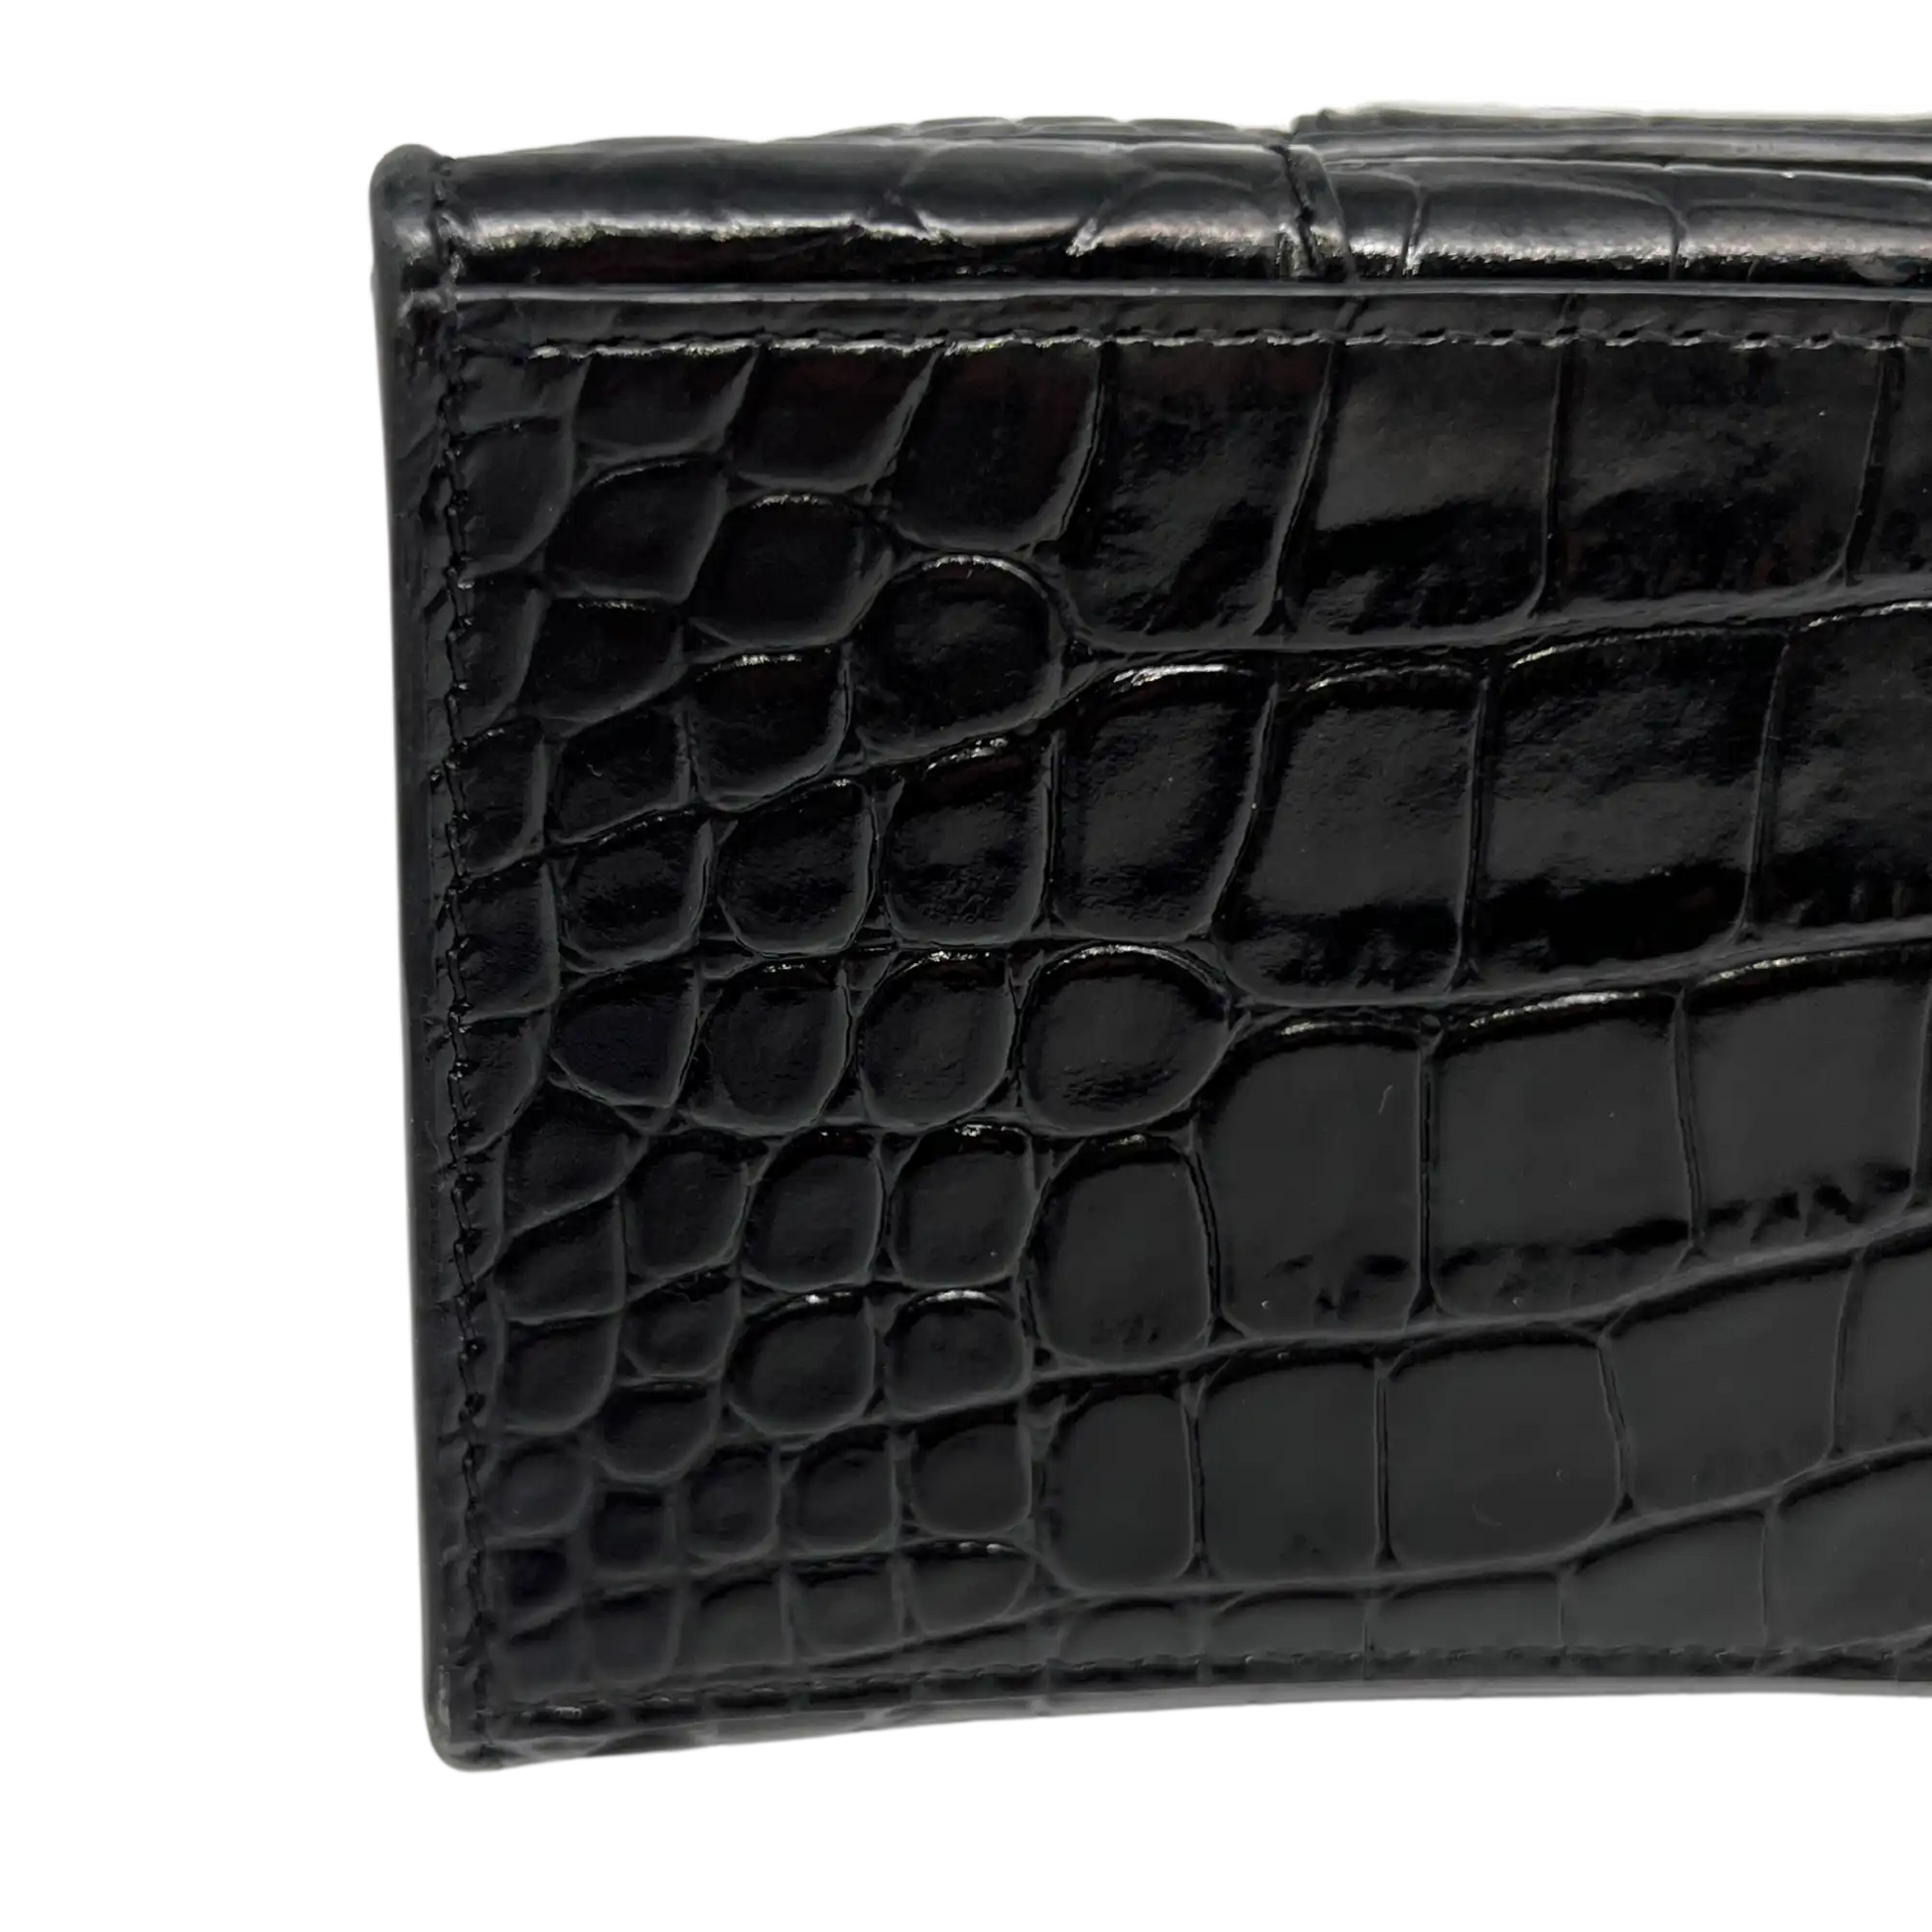 Balenciaga Hourglass XS Bag  Krokodil Optik schwarz / sehr gut Balenciaga